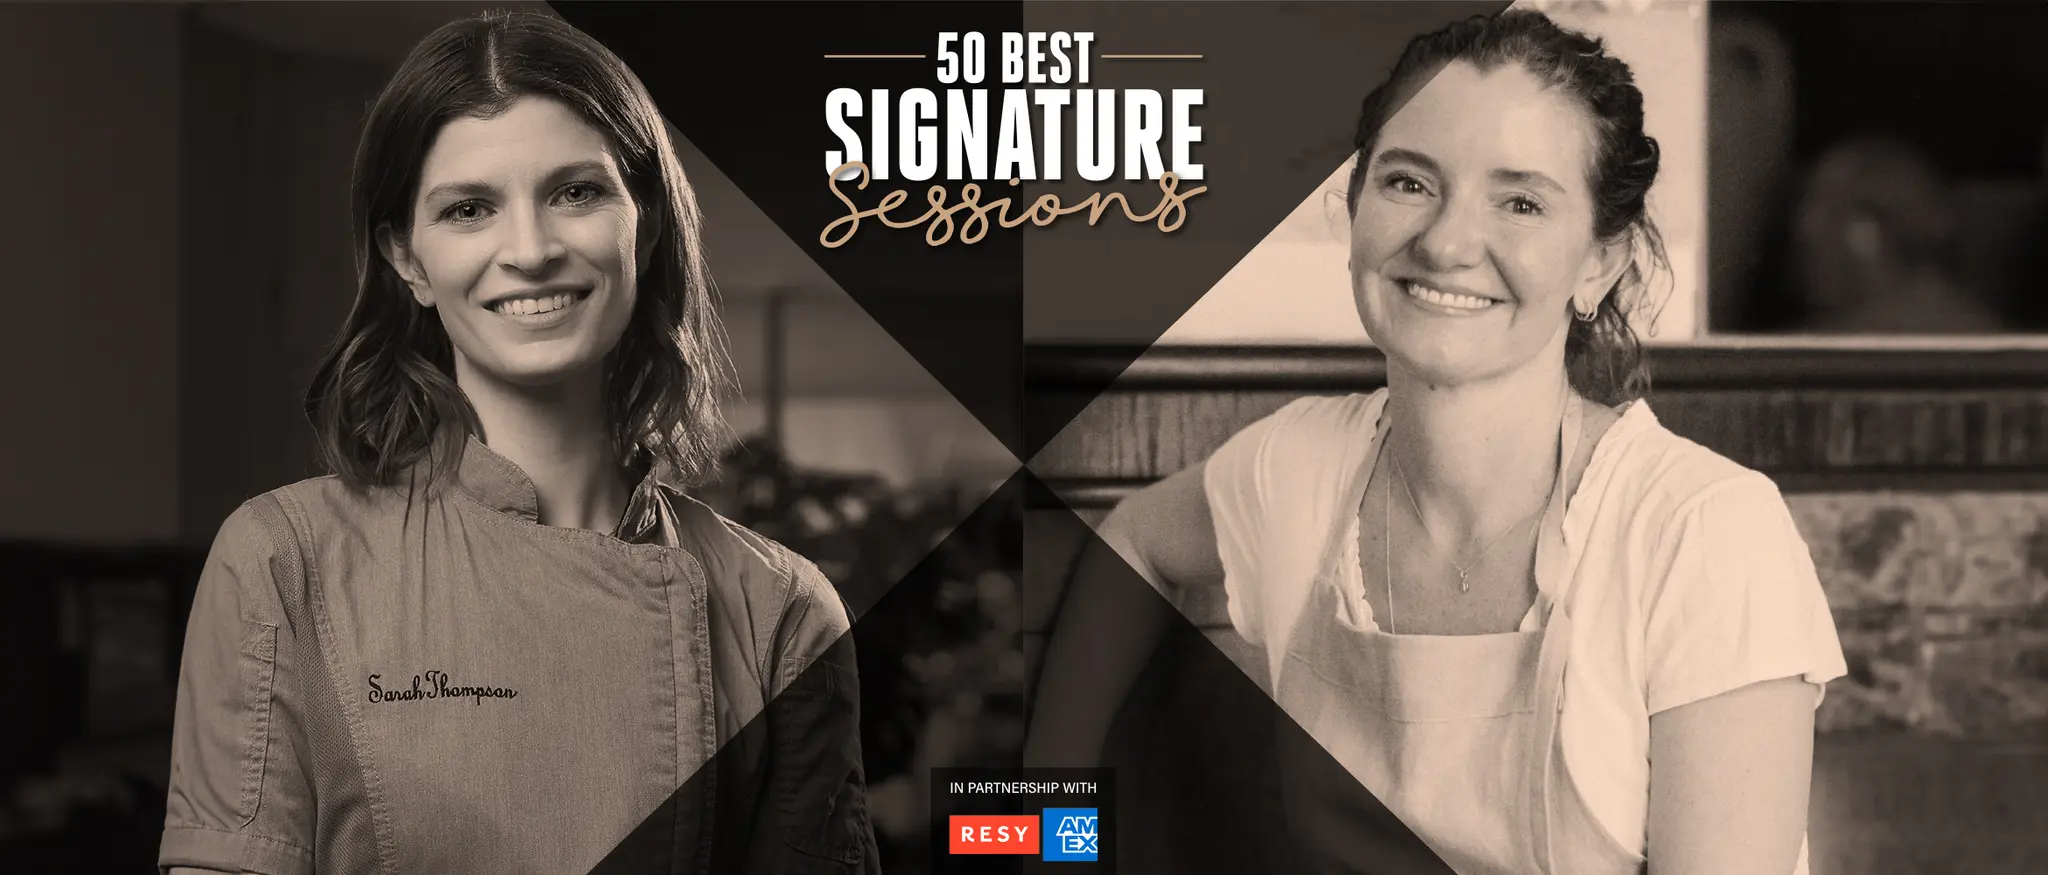 50 Best Signature Session: Elena Reygadas (Rosetta, Mexico City) x Sarah Thompson (Casa Playa, Las Vegas)